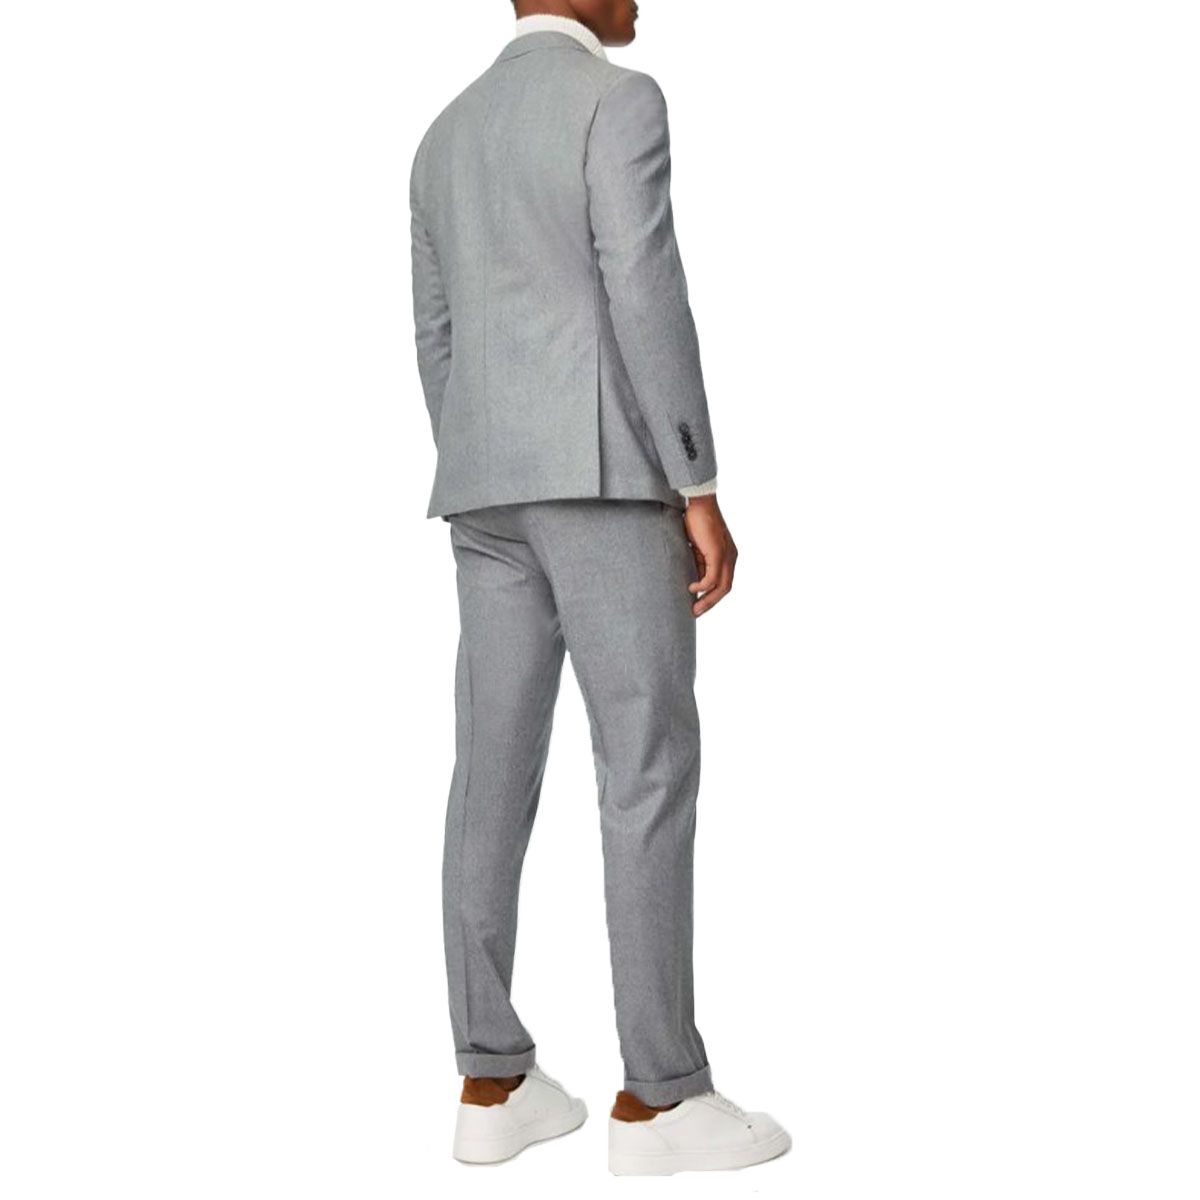 Jim Suit In Grey